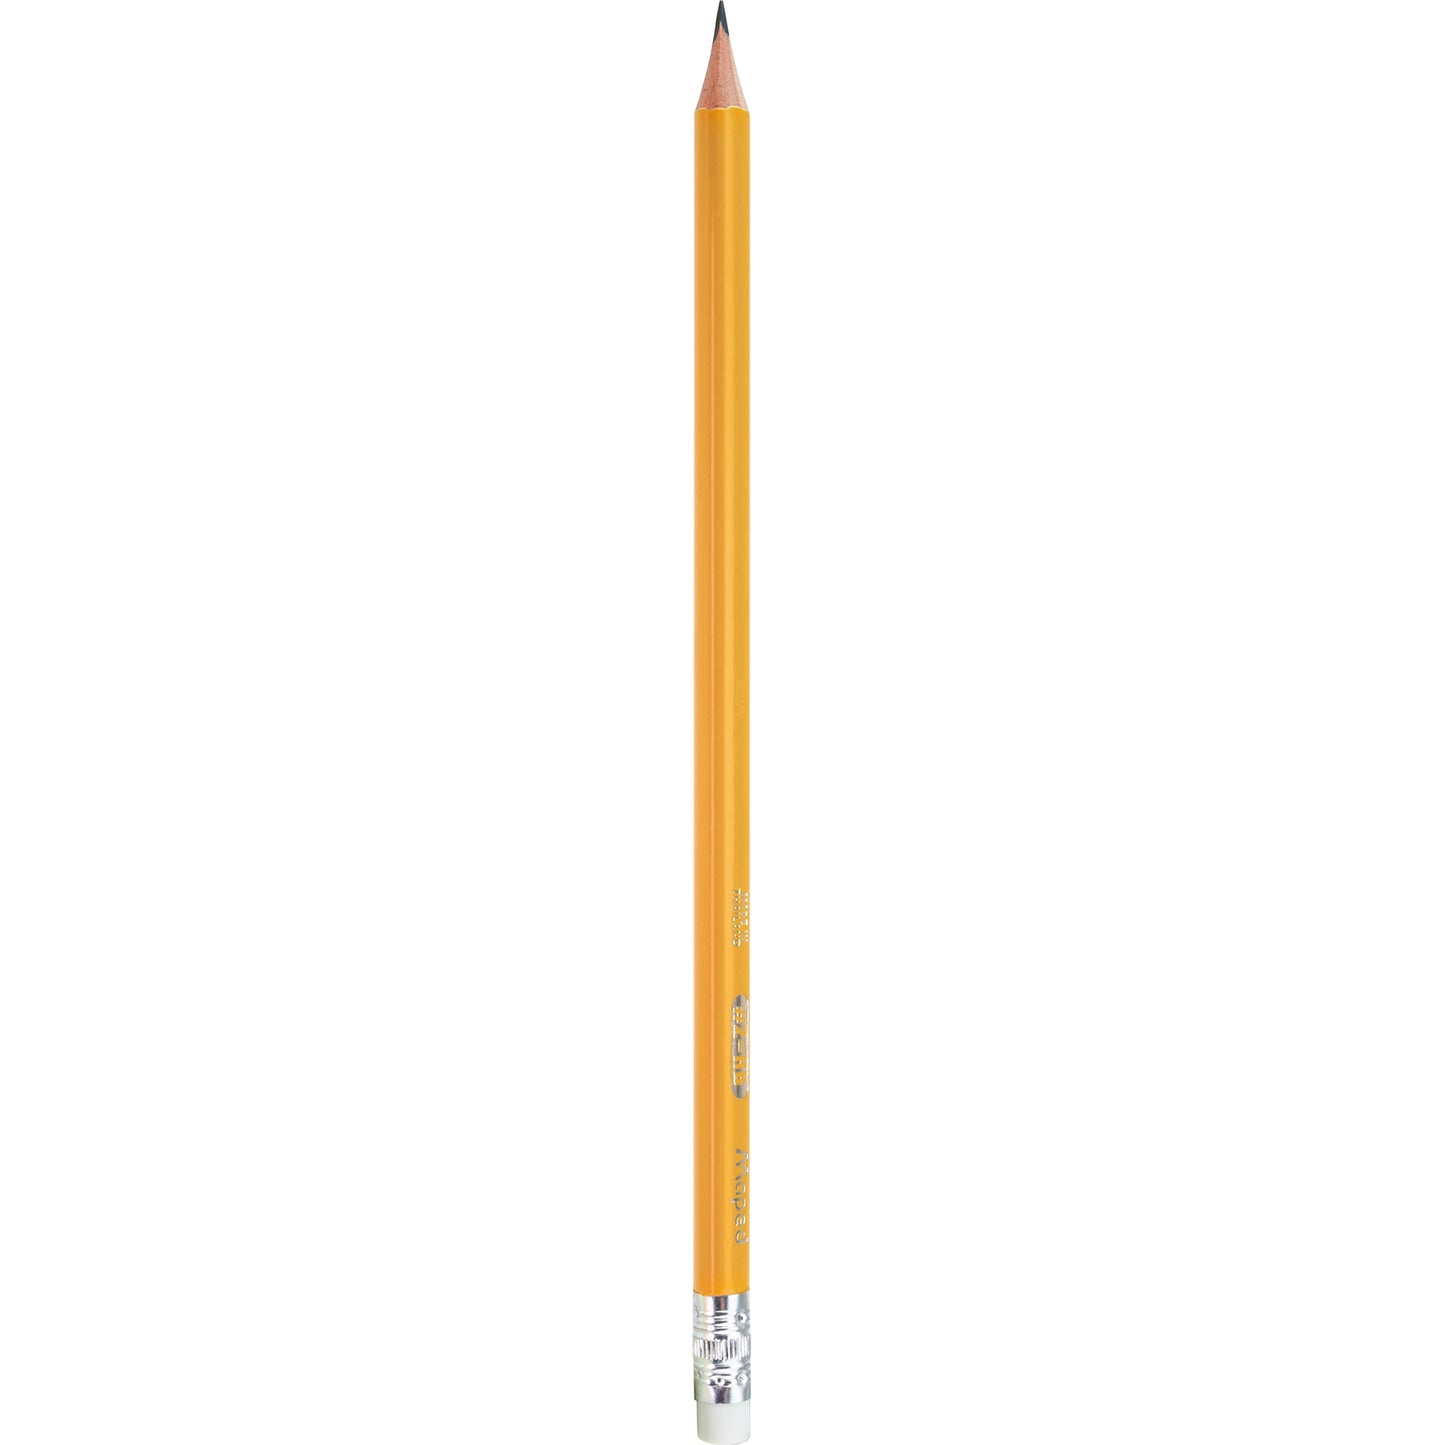 Essentials Yellow Triangular Graphite #2 Pencils, Pack of 144